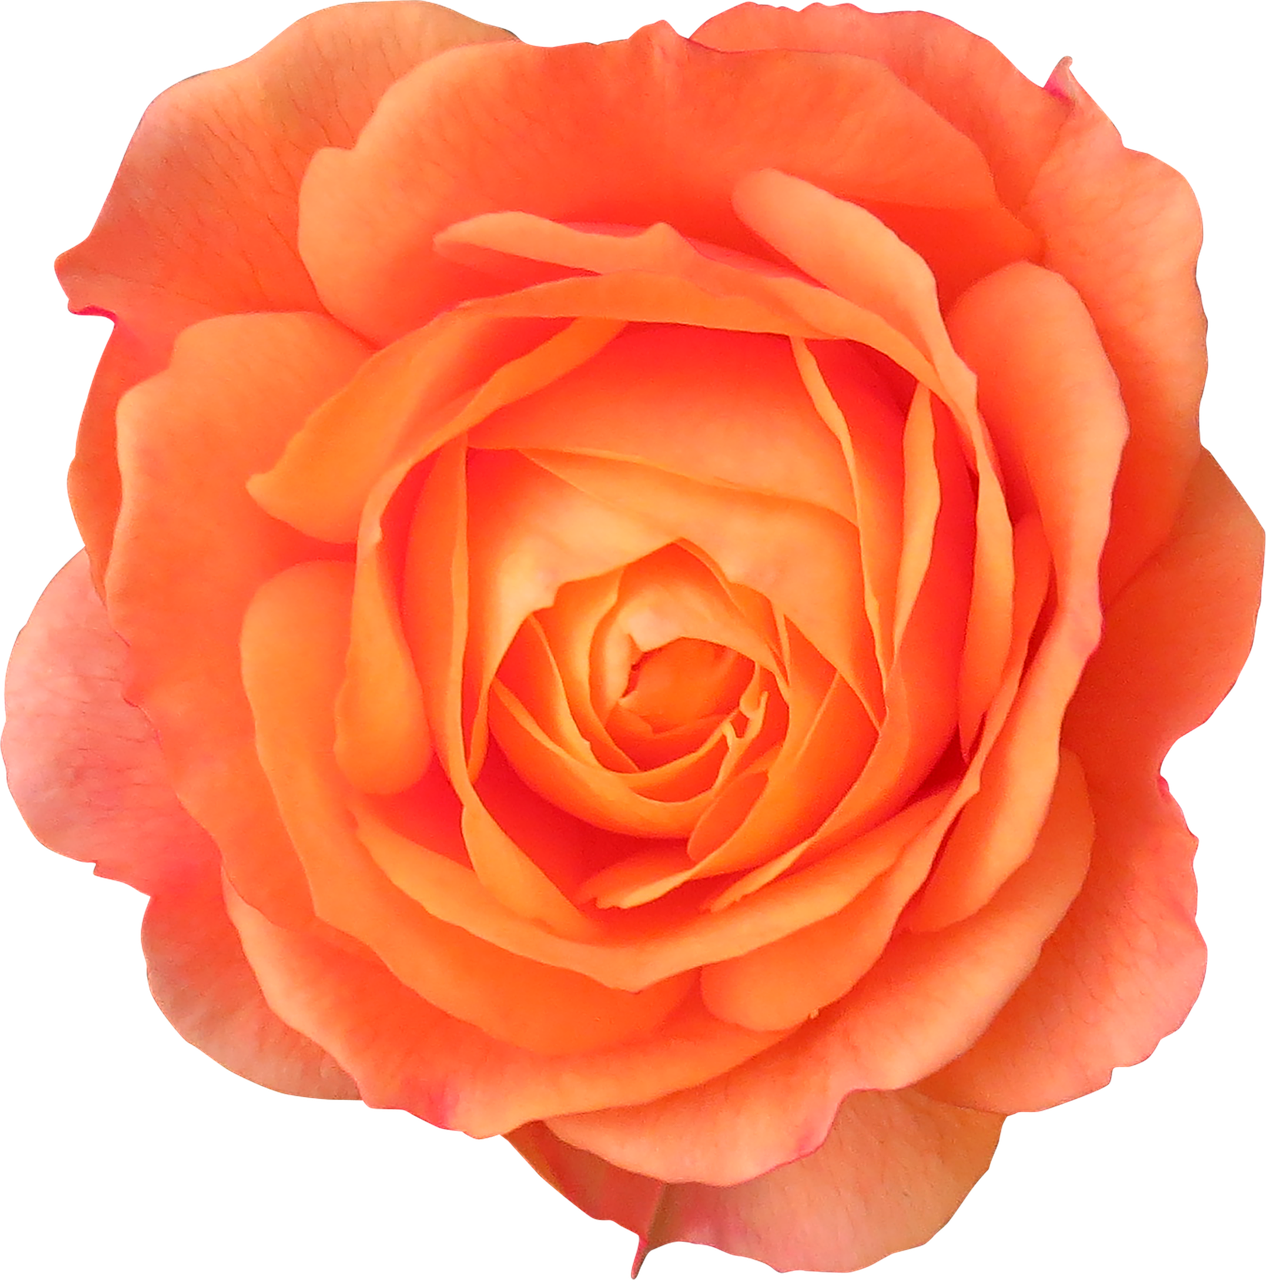 Flower Orange Rose Orange Flower Png Picpng